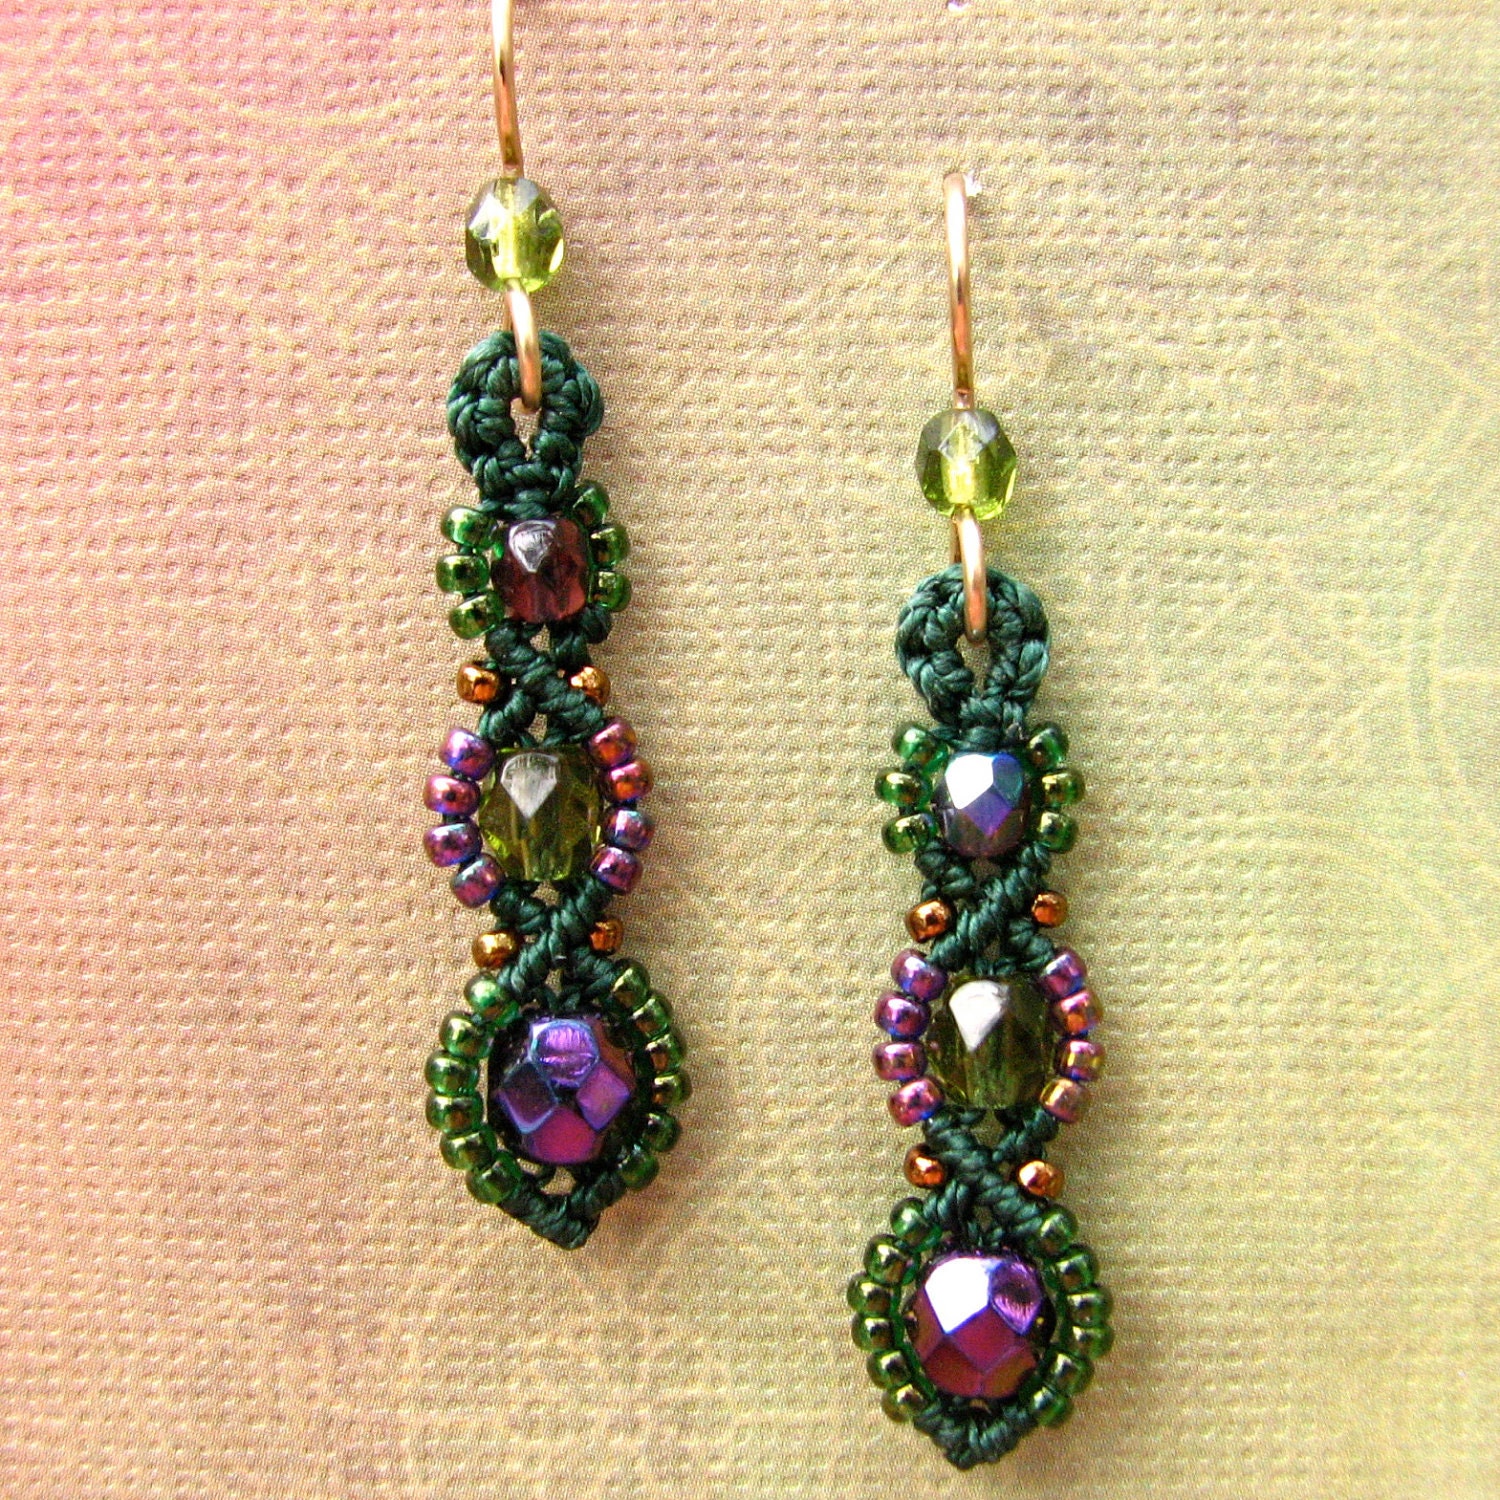 Teardrop pendant earrings pattern jewelry making templates materials bail